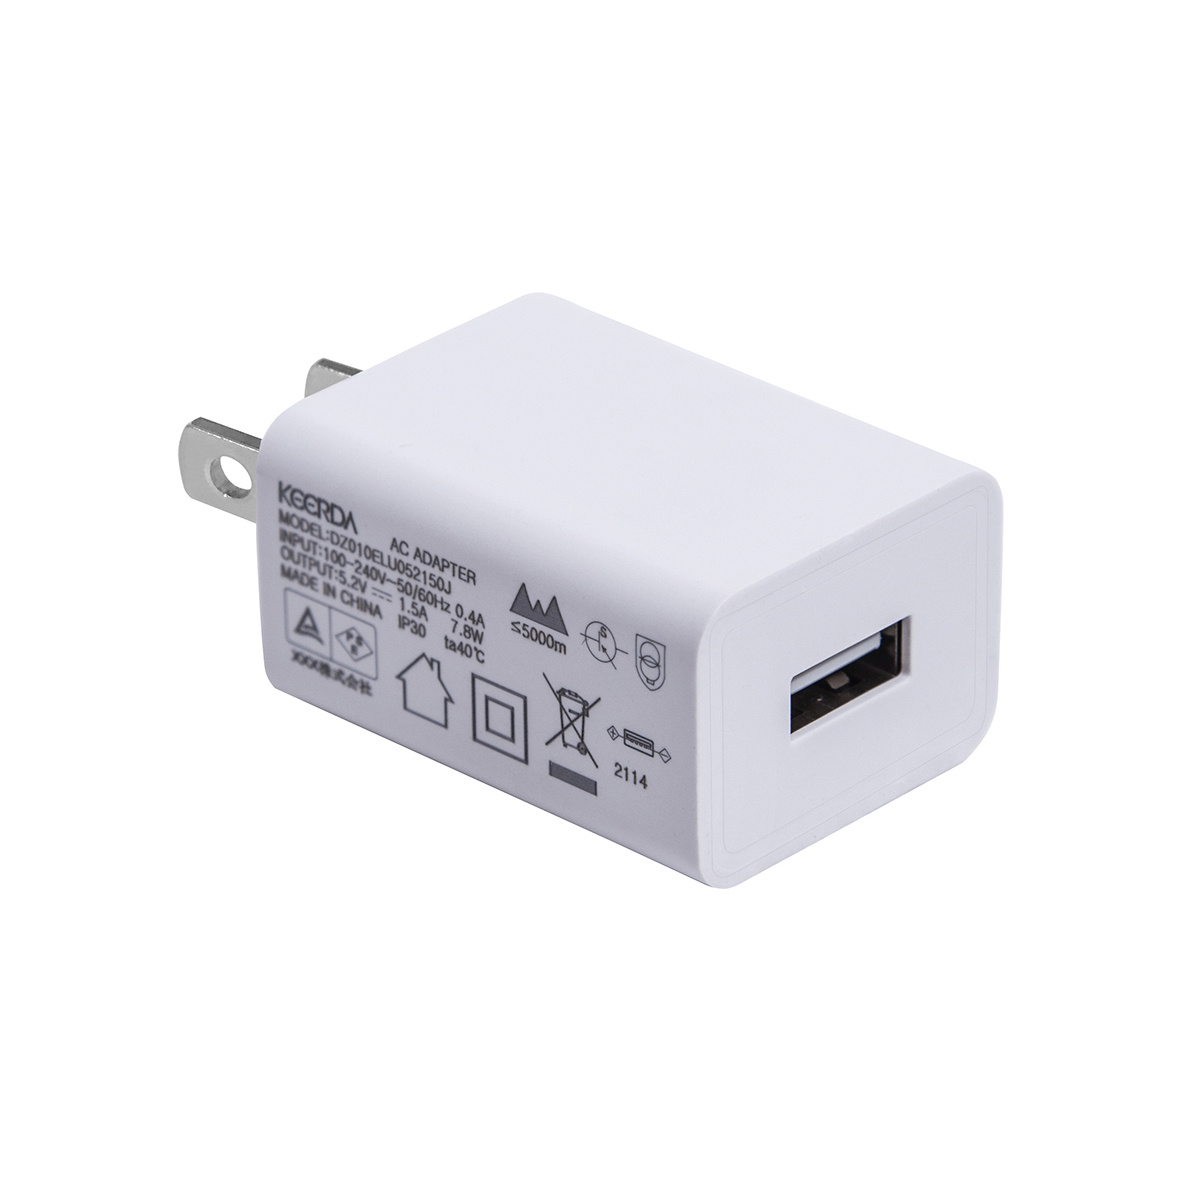 USB充电器 5V1A or 2A